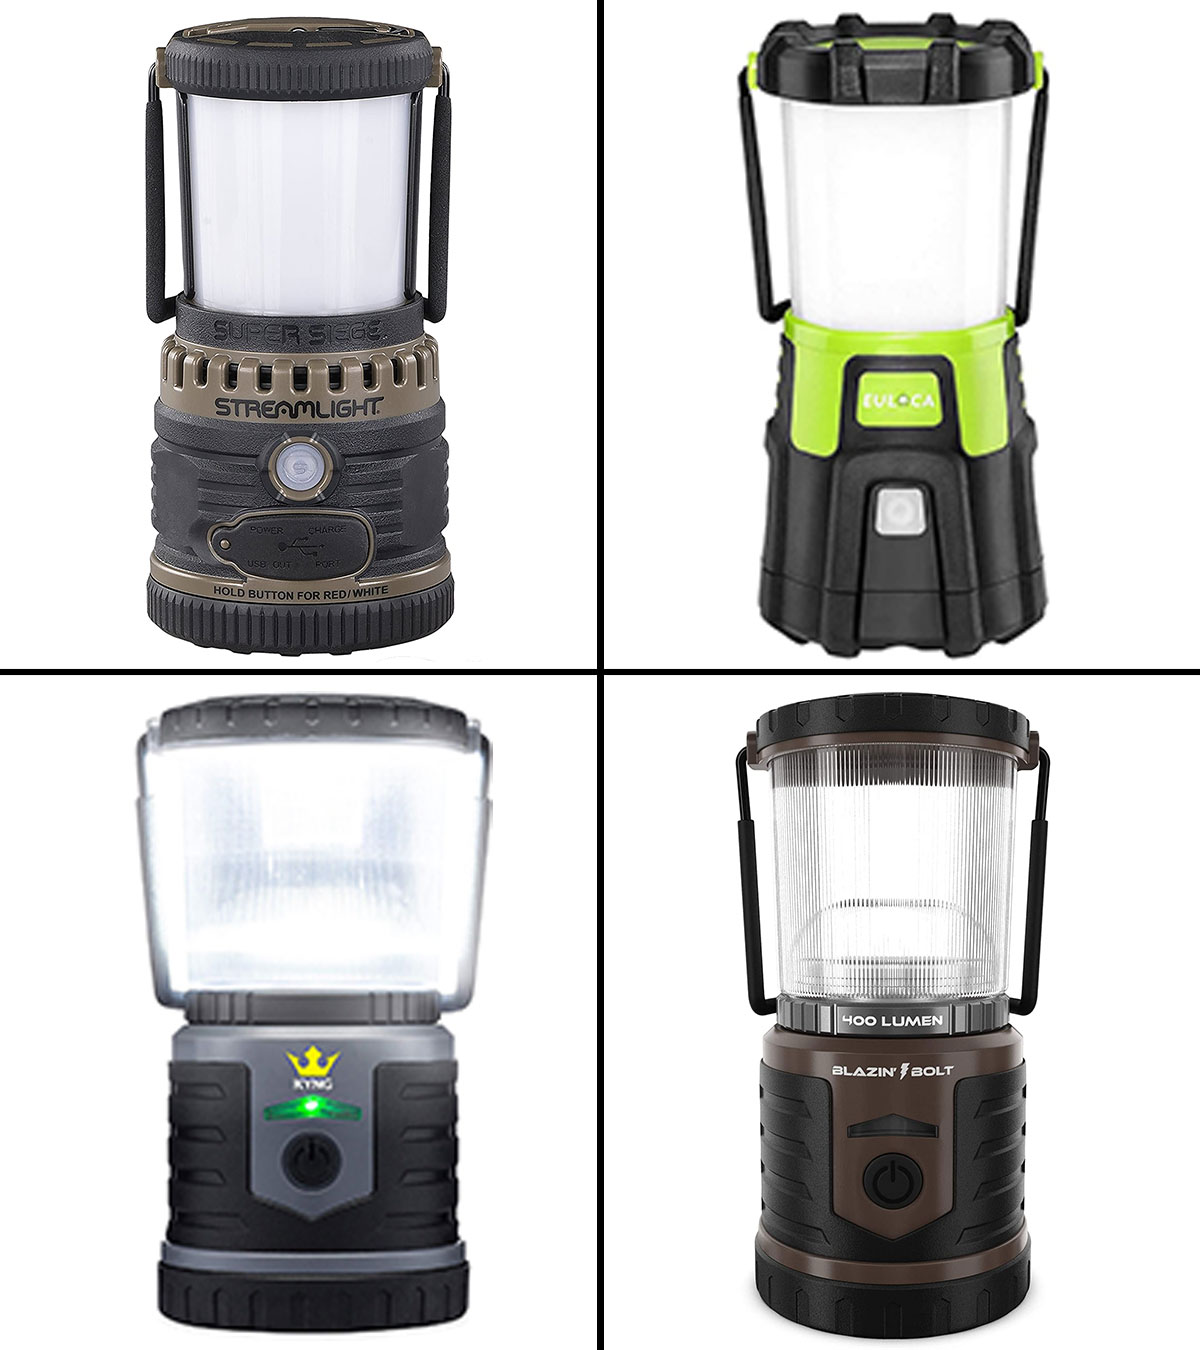 https://www.momjunction.com/wp-content/uploads/2020/05/13-Best-Rechargeable-Lanterns-In-2020-Banner.jpg